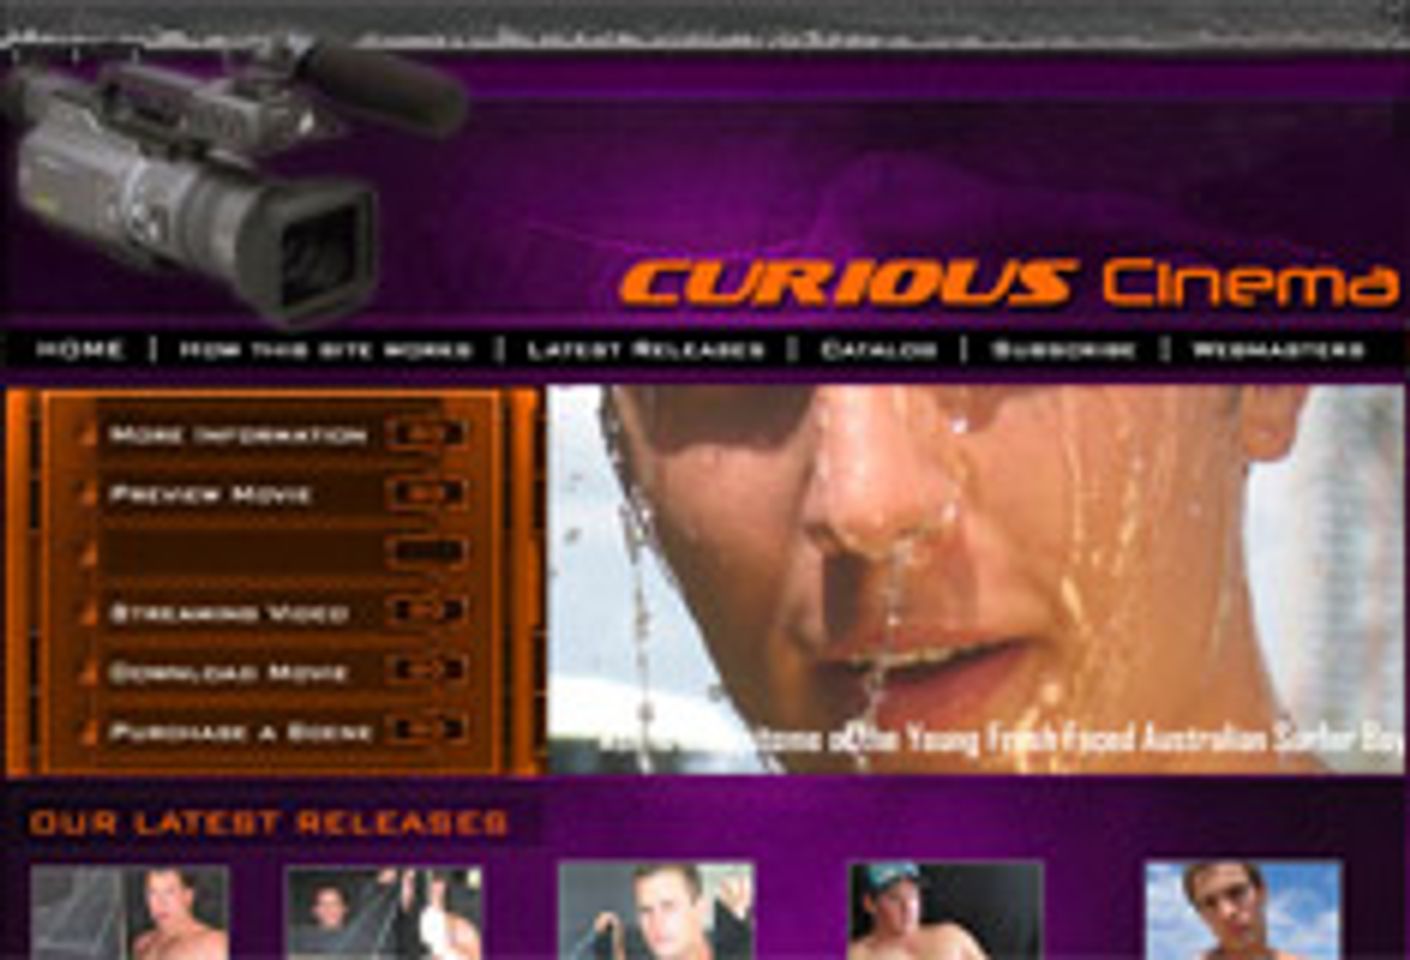 CuriousCash Launches CuriousCinema